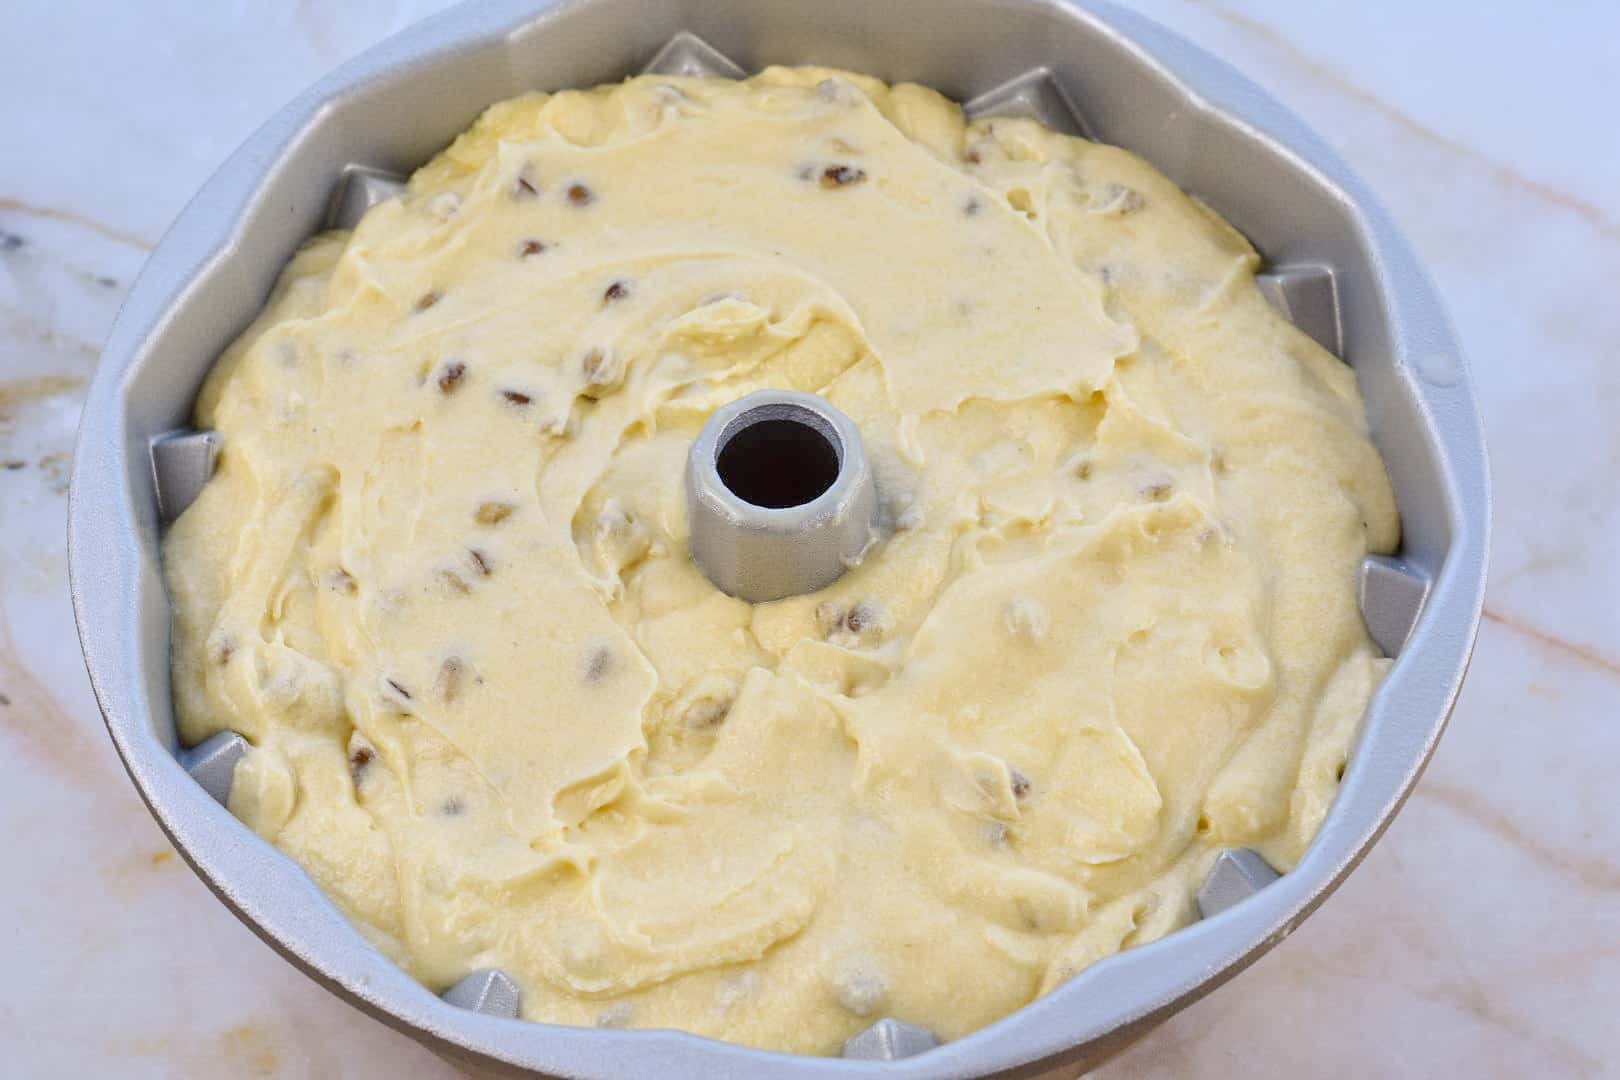 cake batter in bundt pan before baking